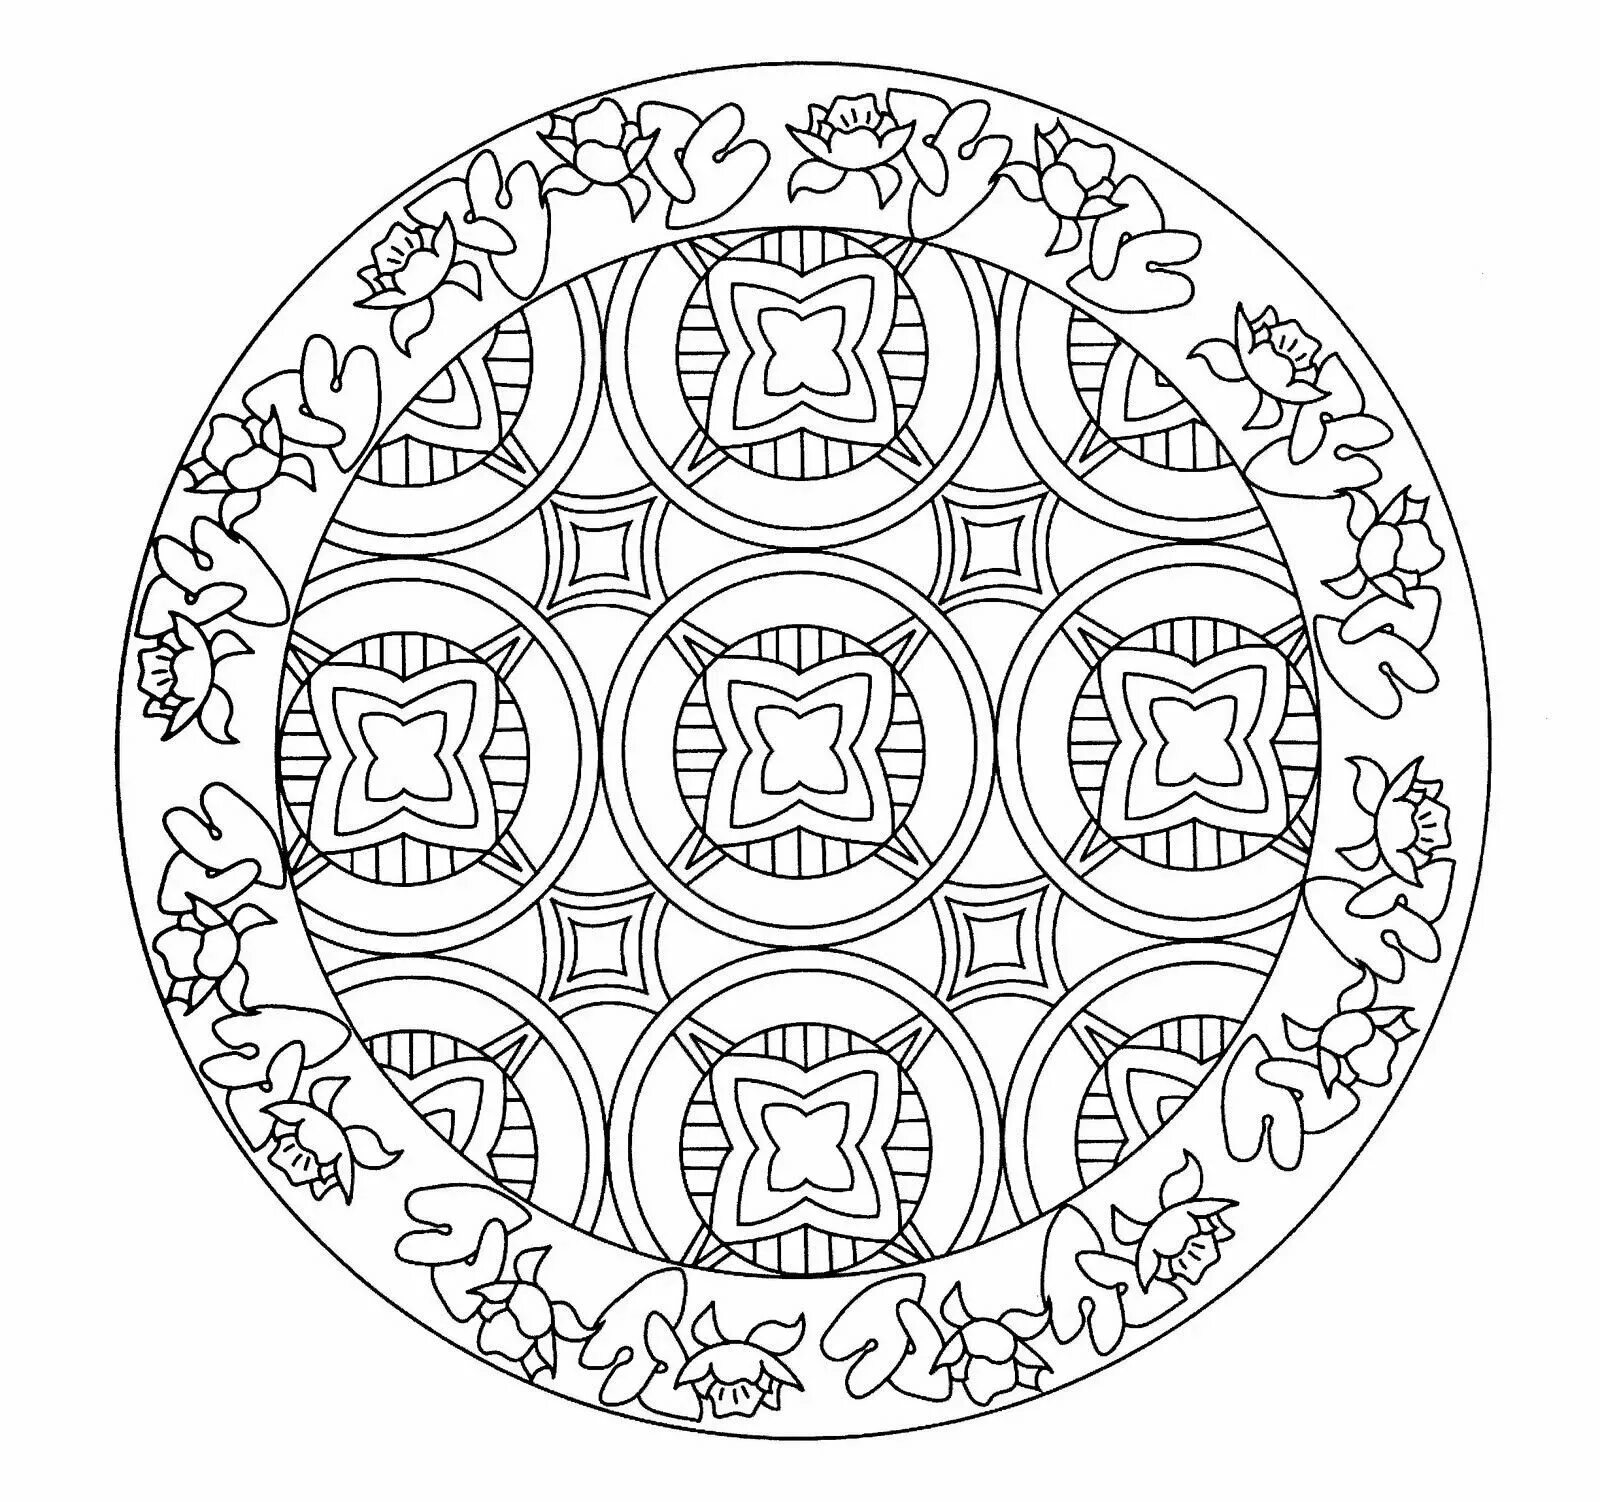 Royal coloring meaning of the mandala